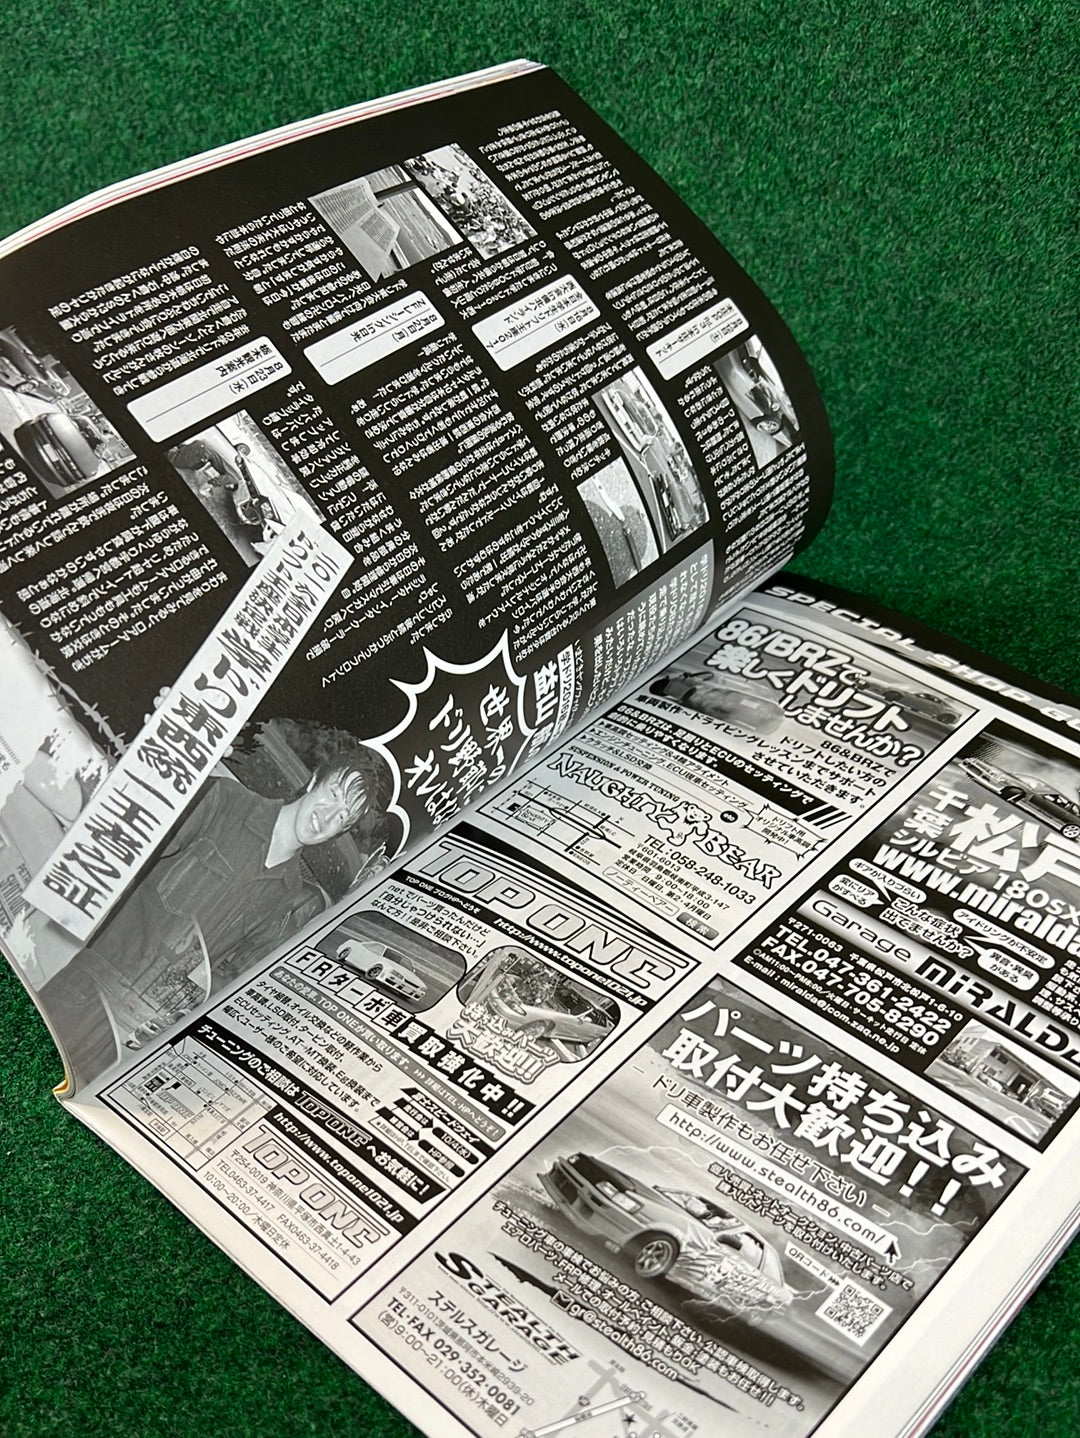 Drift Tengoku Magazine - October 2017